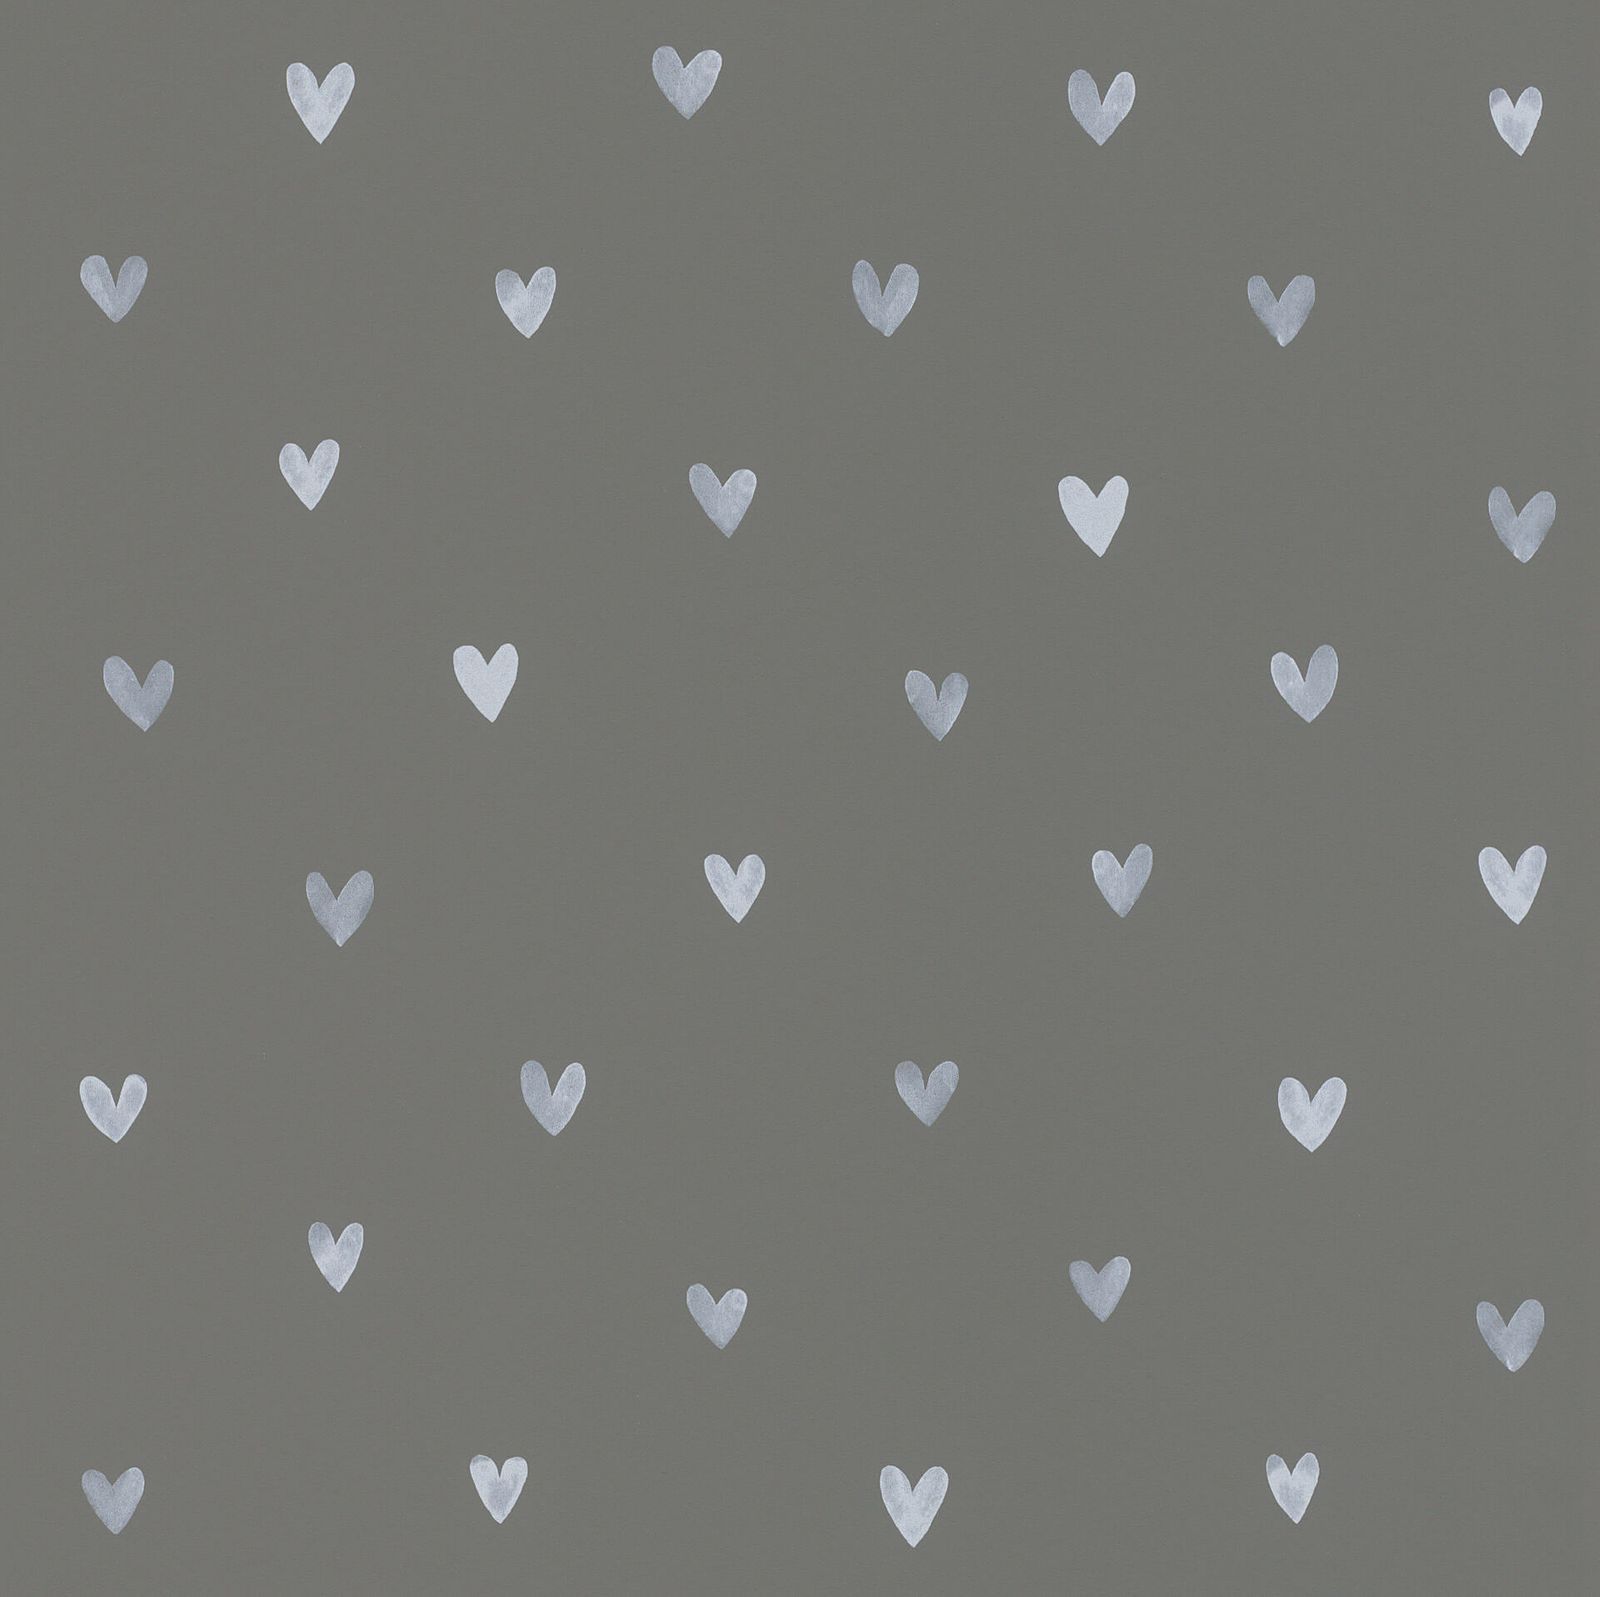 Free download Kids Wallpaper Cute Hearts white grey 138914 [1000x1000 ...